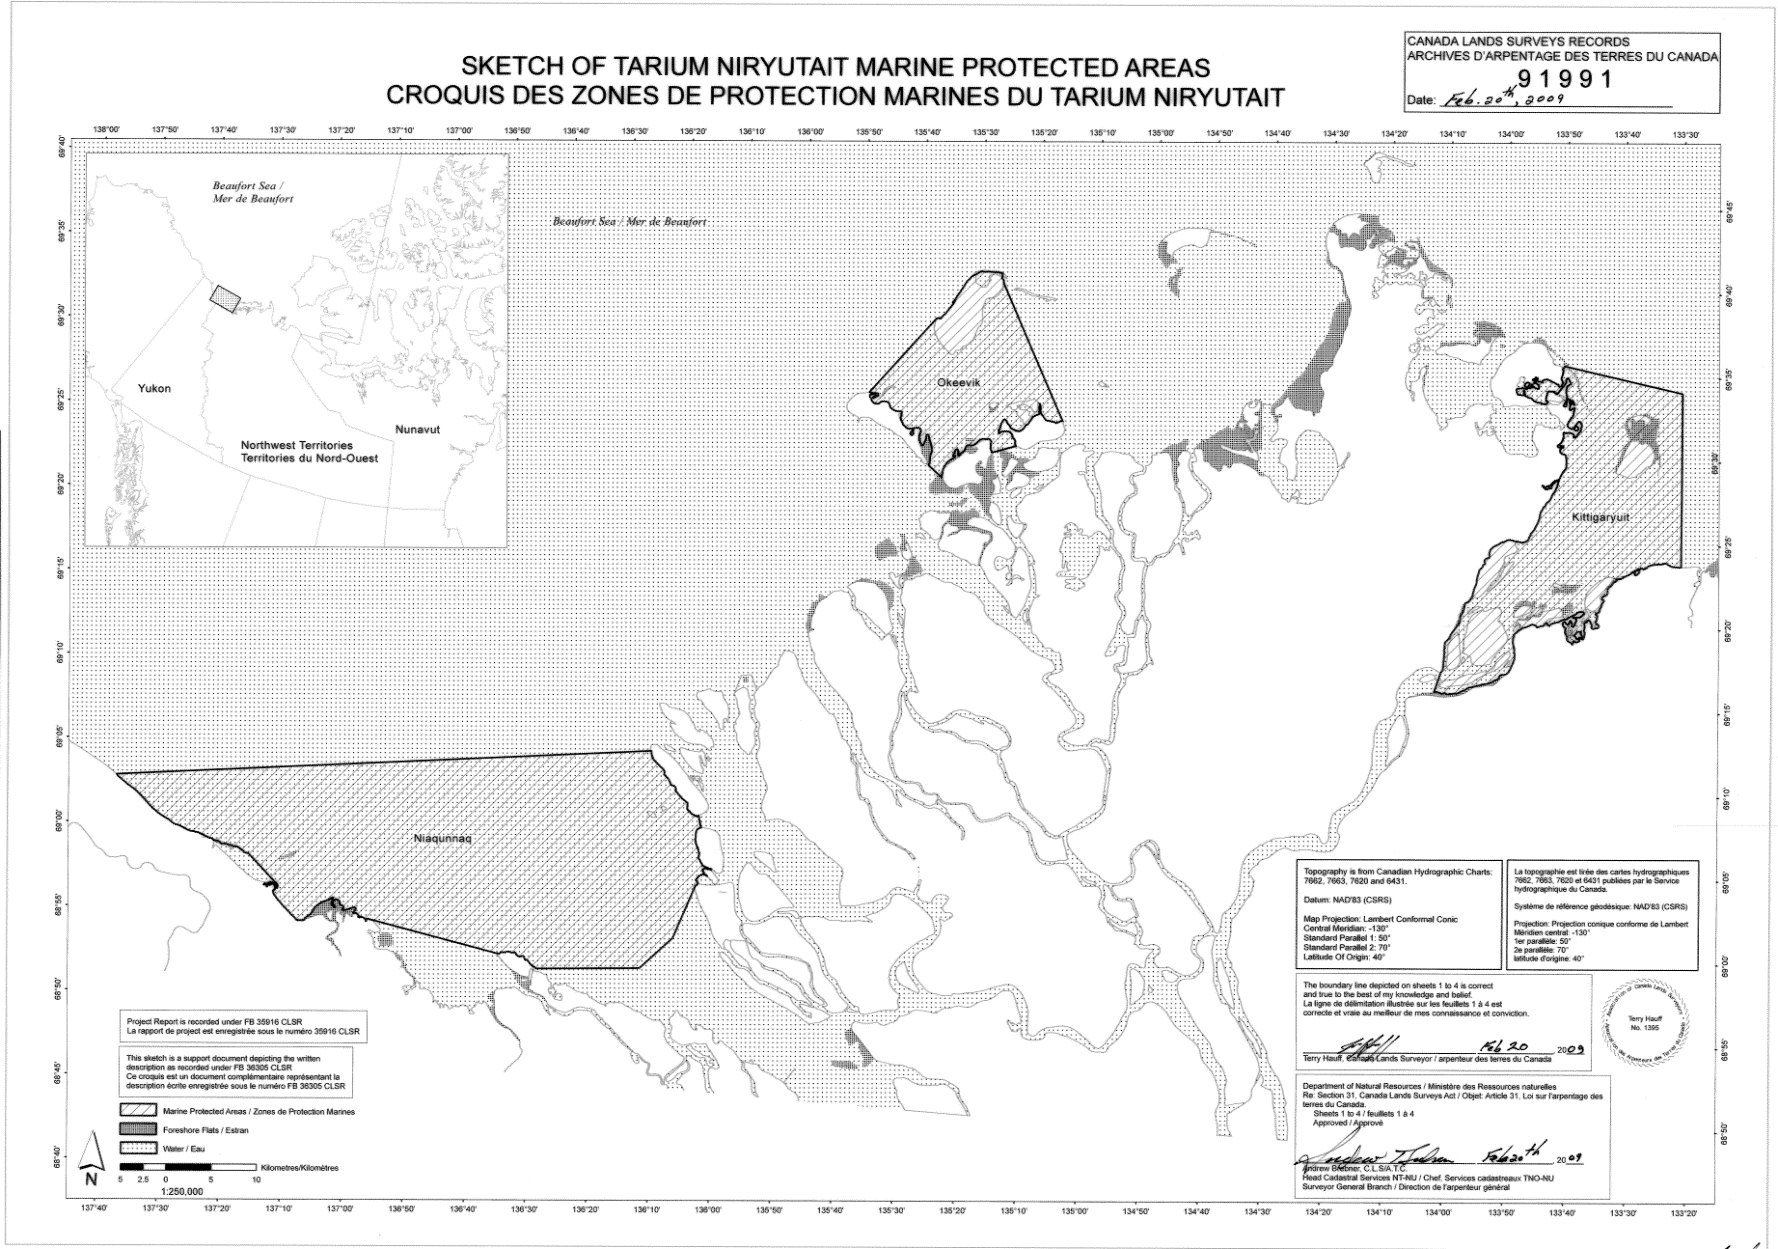 Map of the Tarium Niryutait Marine Protected Areas. The marine protected areas are depicted using light grey circles and diagonal lines.